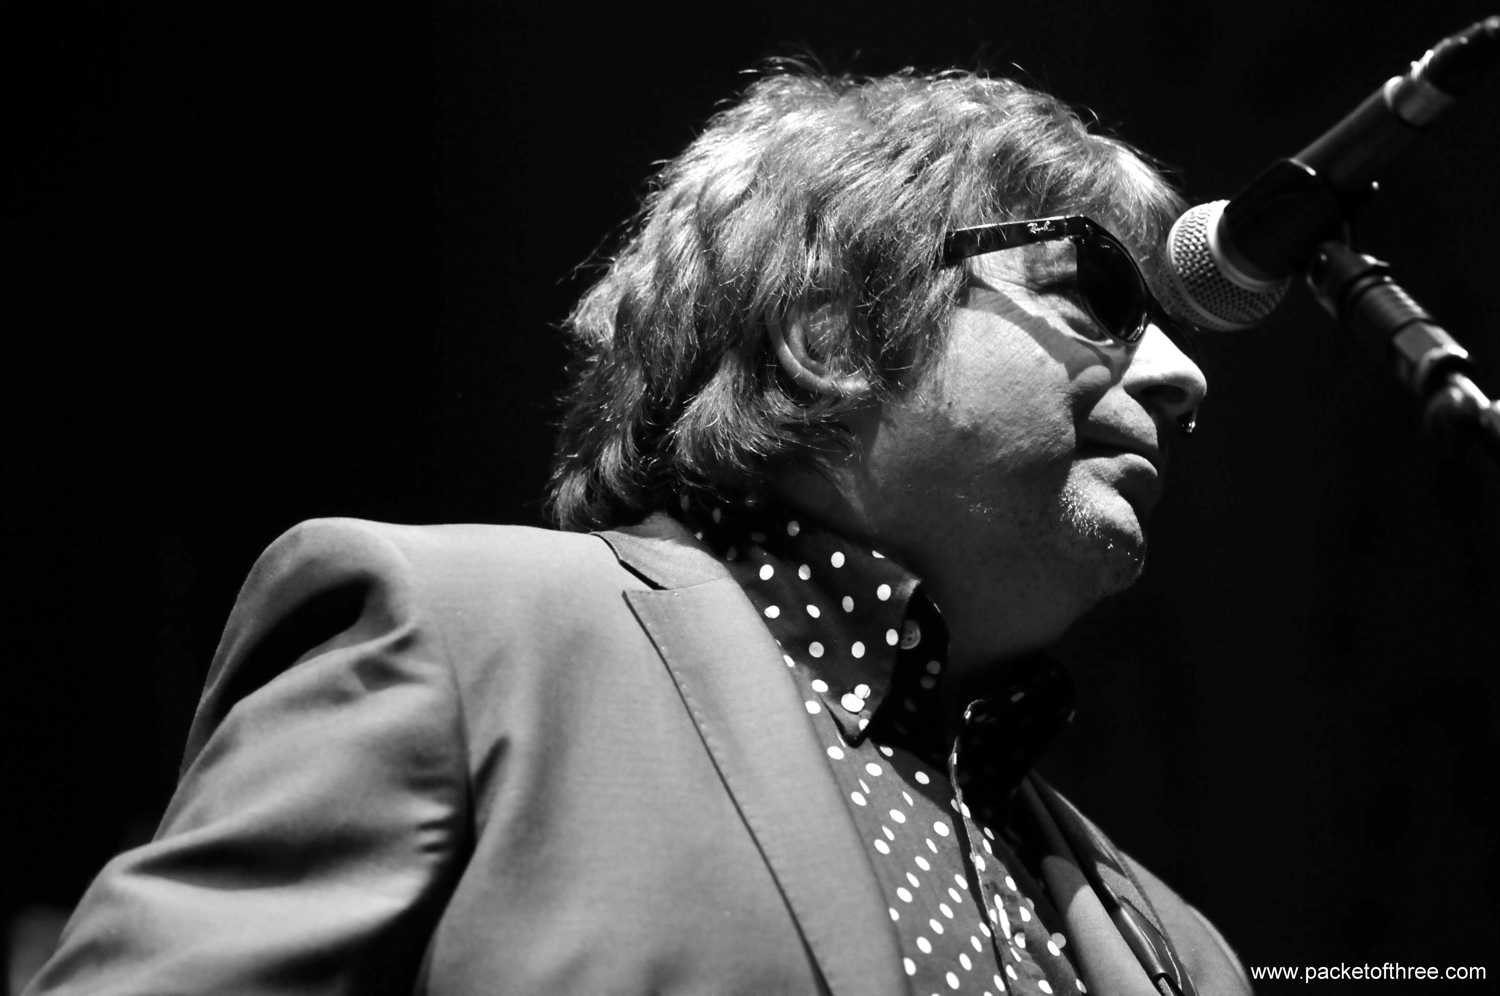 John Bentley - Squeeze live at Liverpool Philharmonic Hall - 10 December 2012